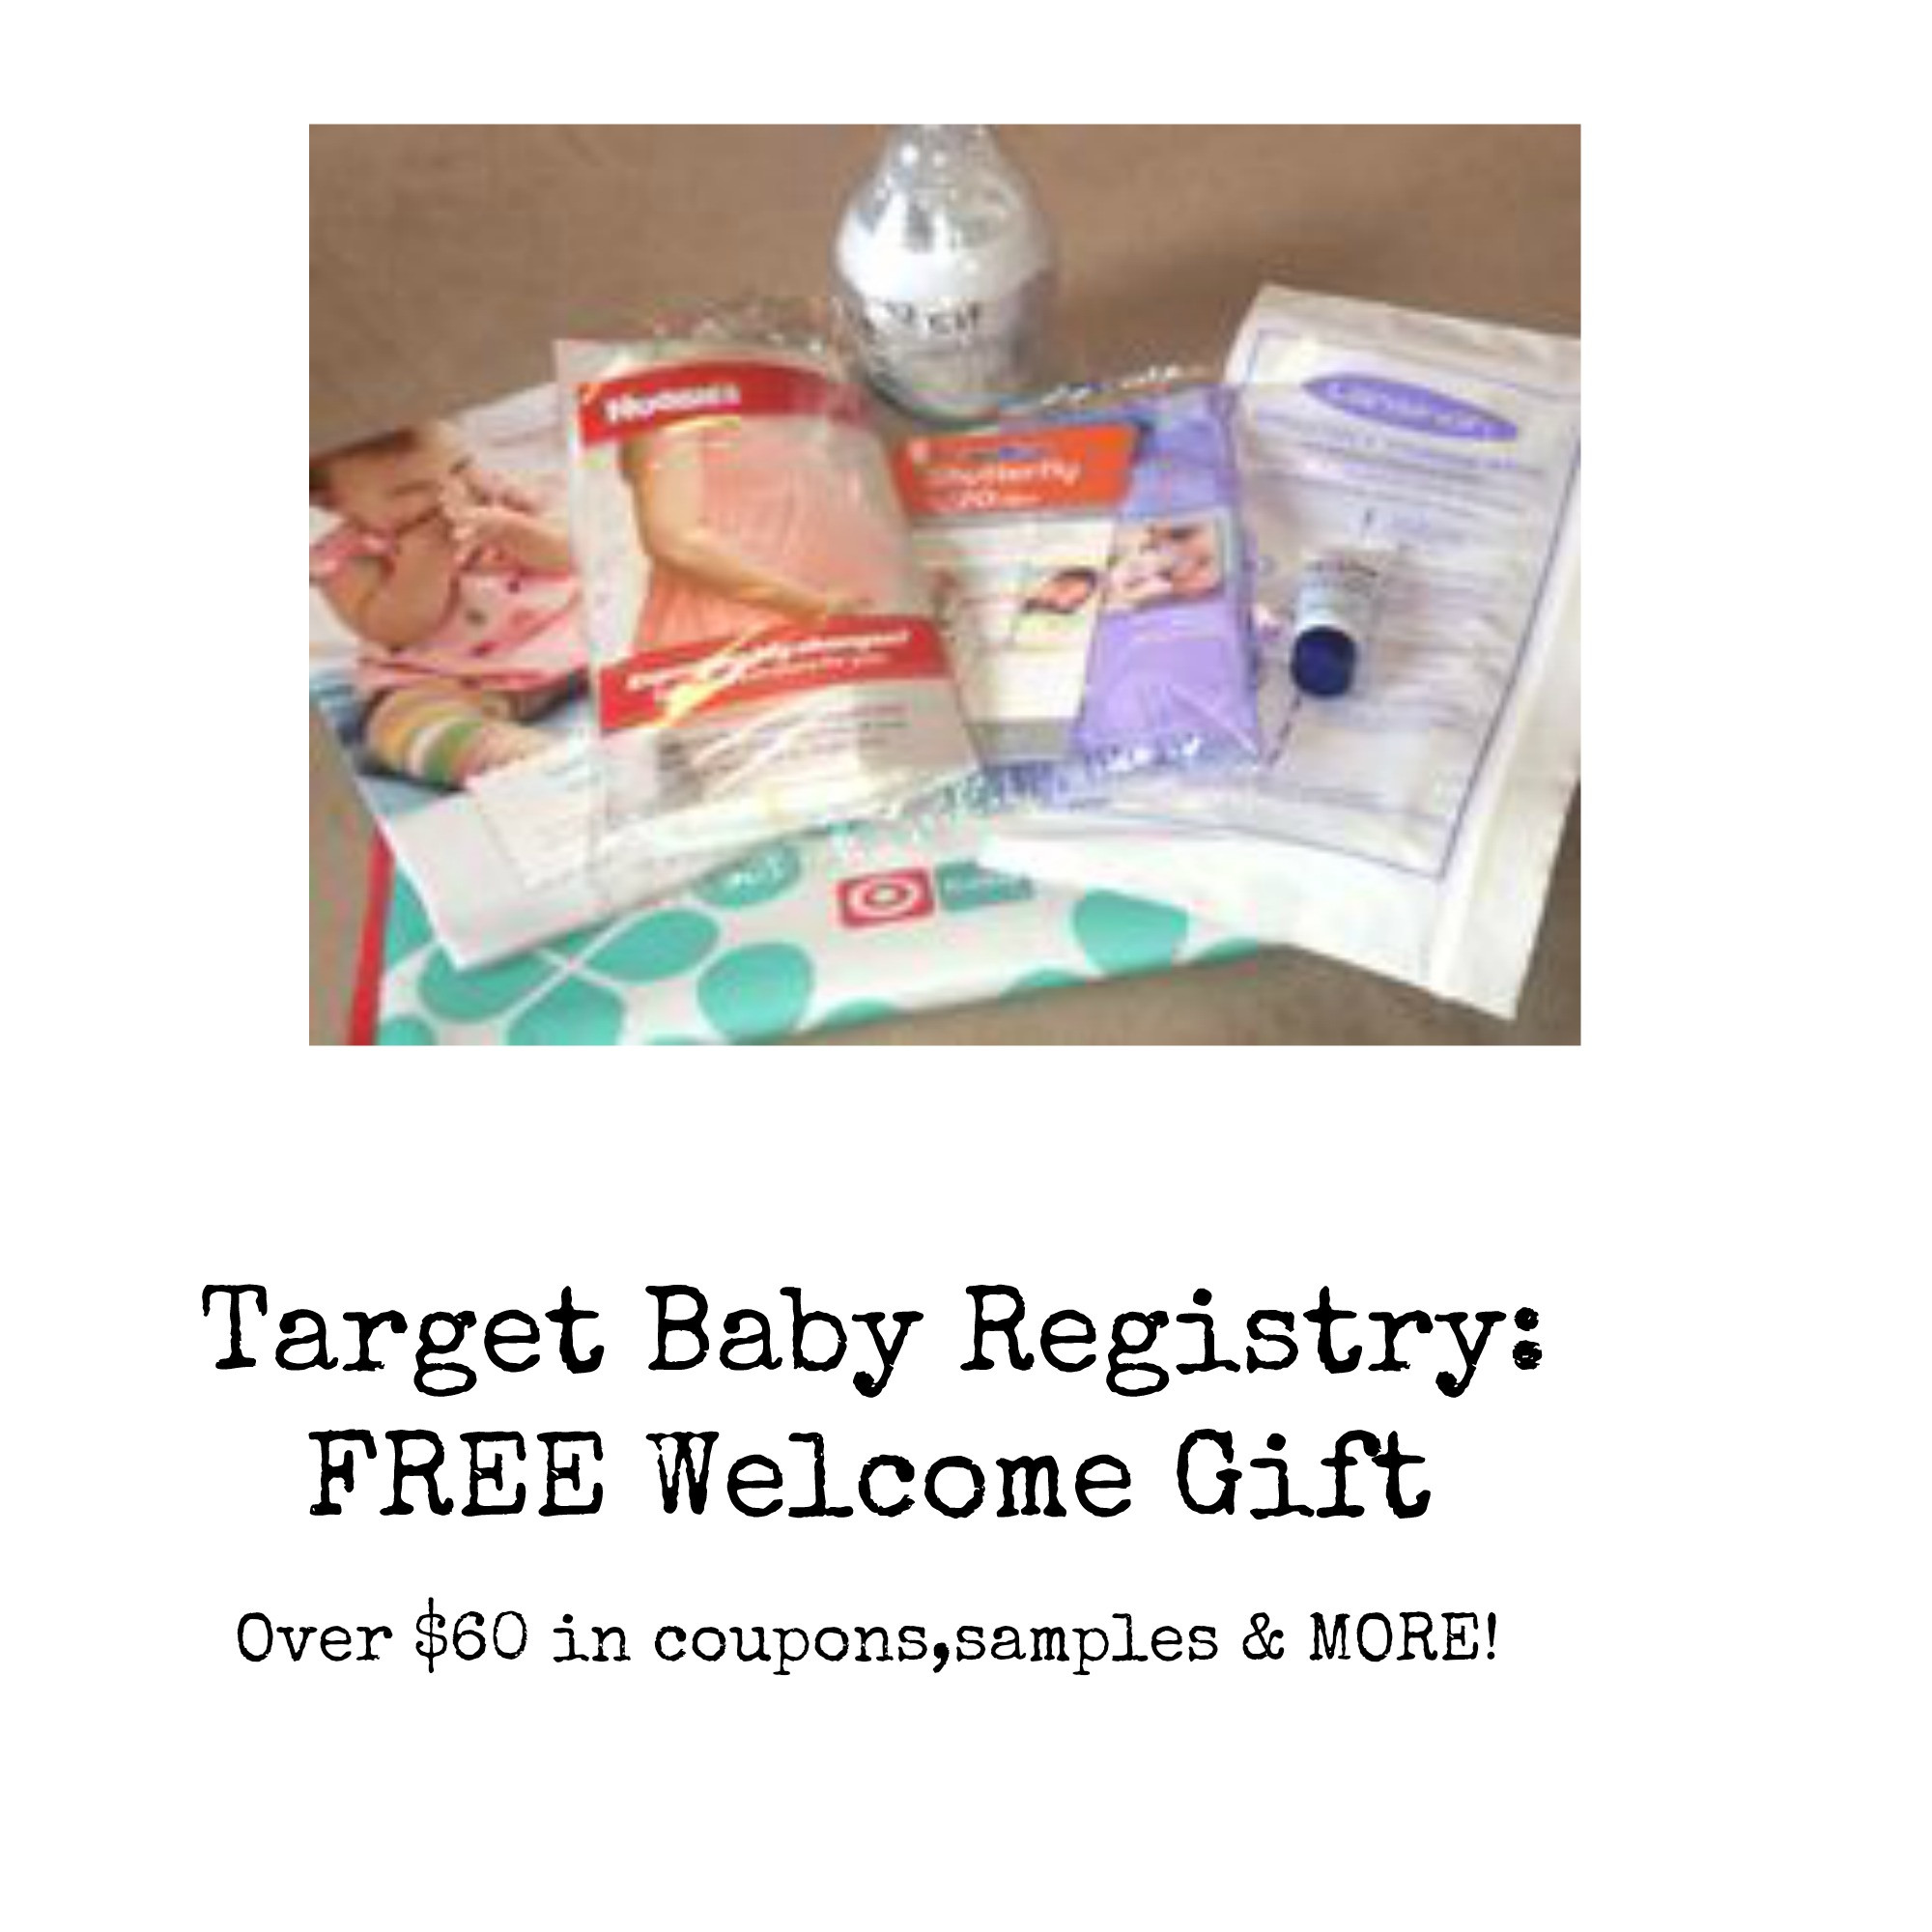 Target Baby Registry Free Gift
 Tar Baby Registry FREE Wel e Gift Over $60 Value